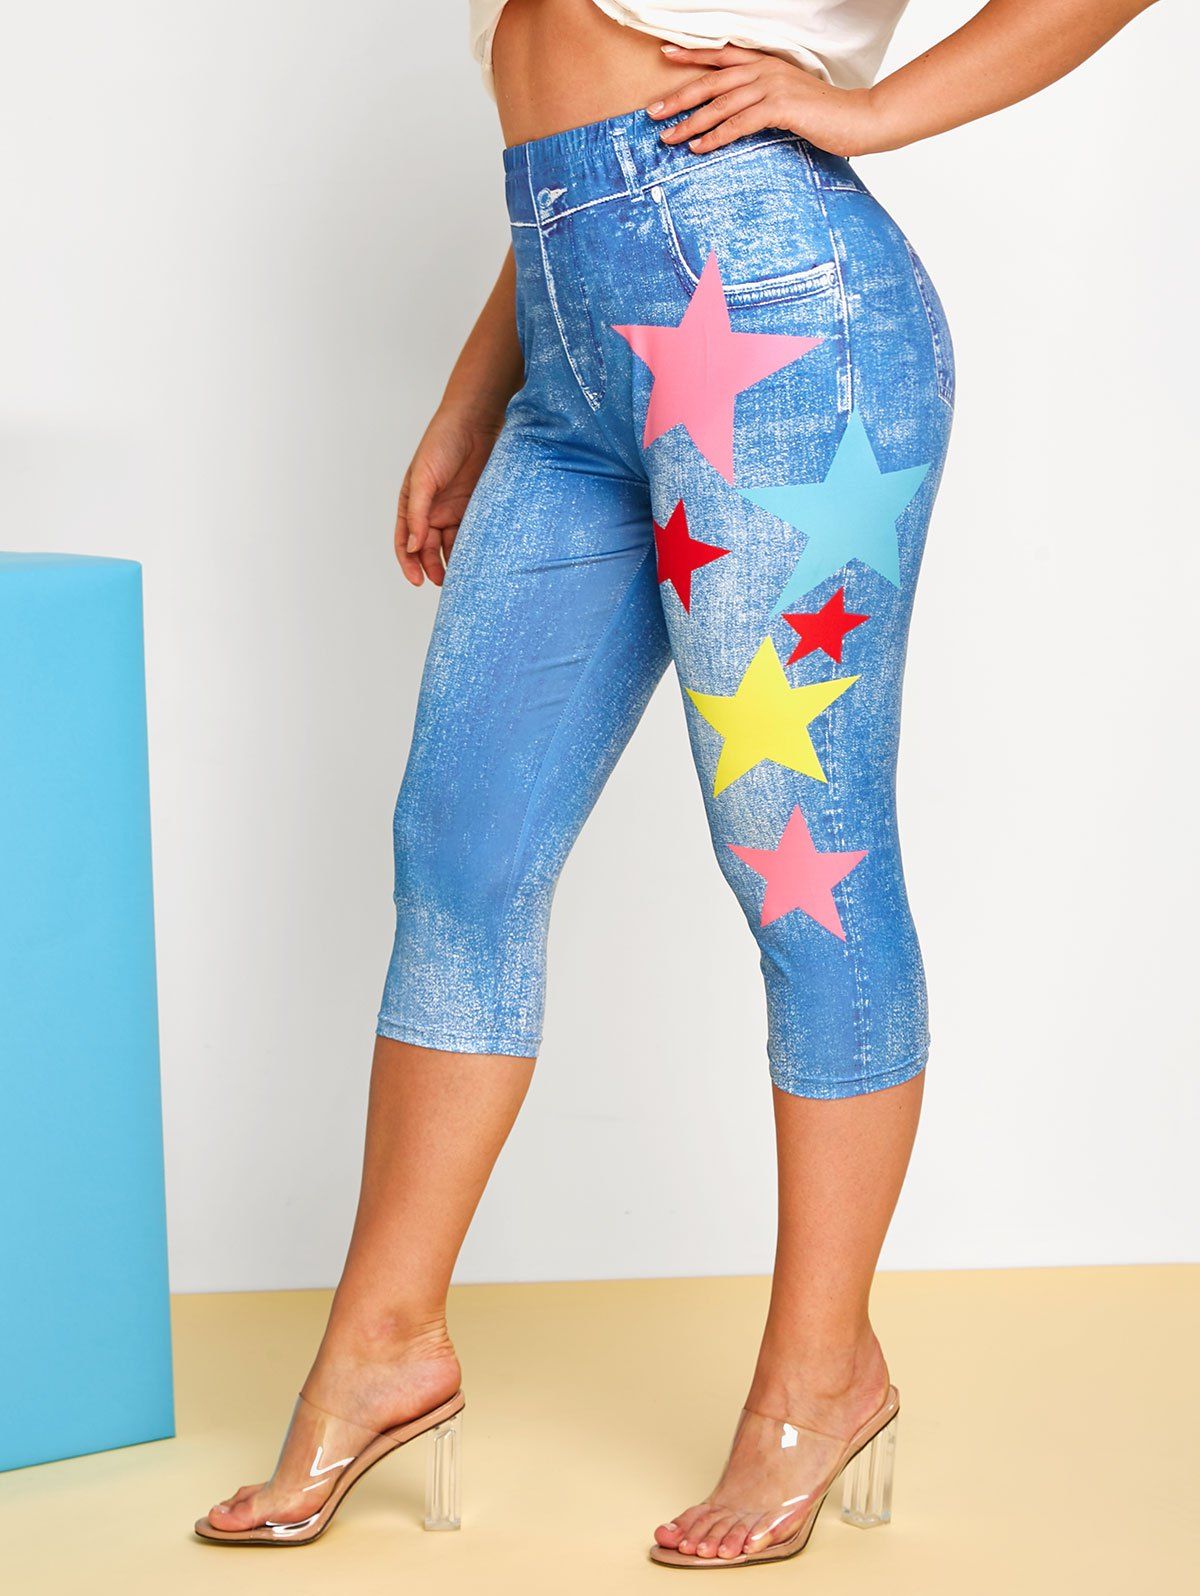 Plus Size Star 3D Jean Print Cropped Jeggings - BLUE L